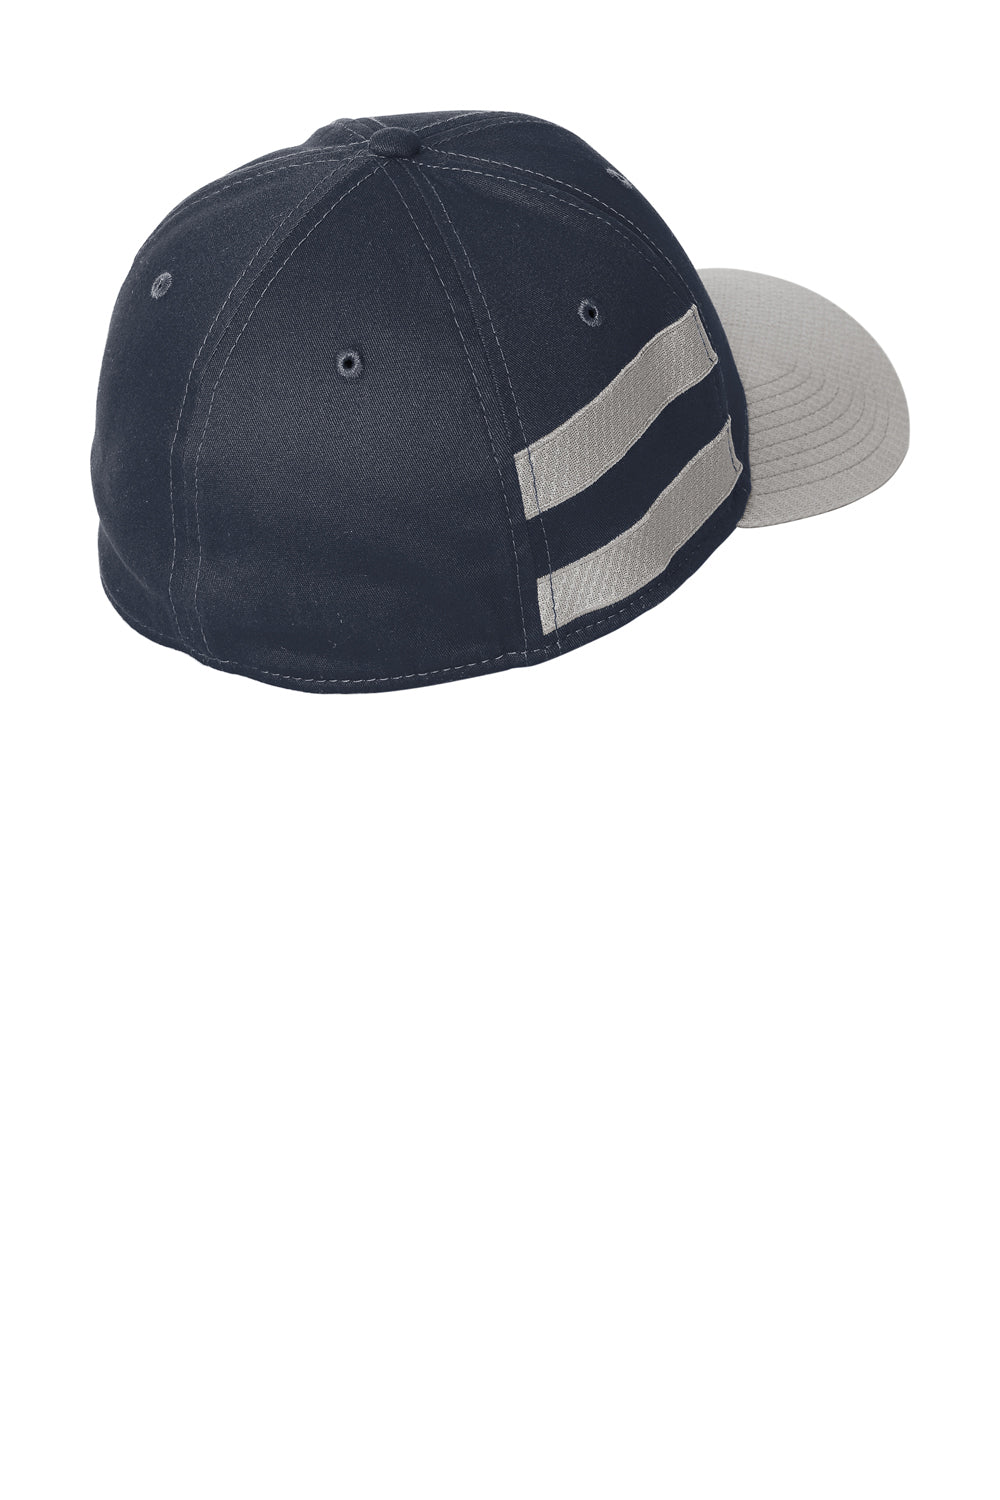 New Era NE1122 Striped Stretch Fit Hat Deep Navy Blue/Grey Side